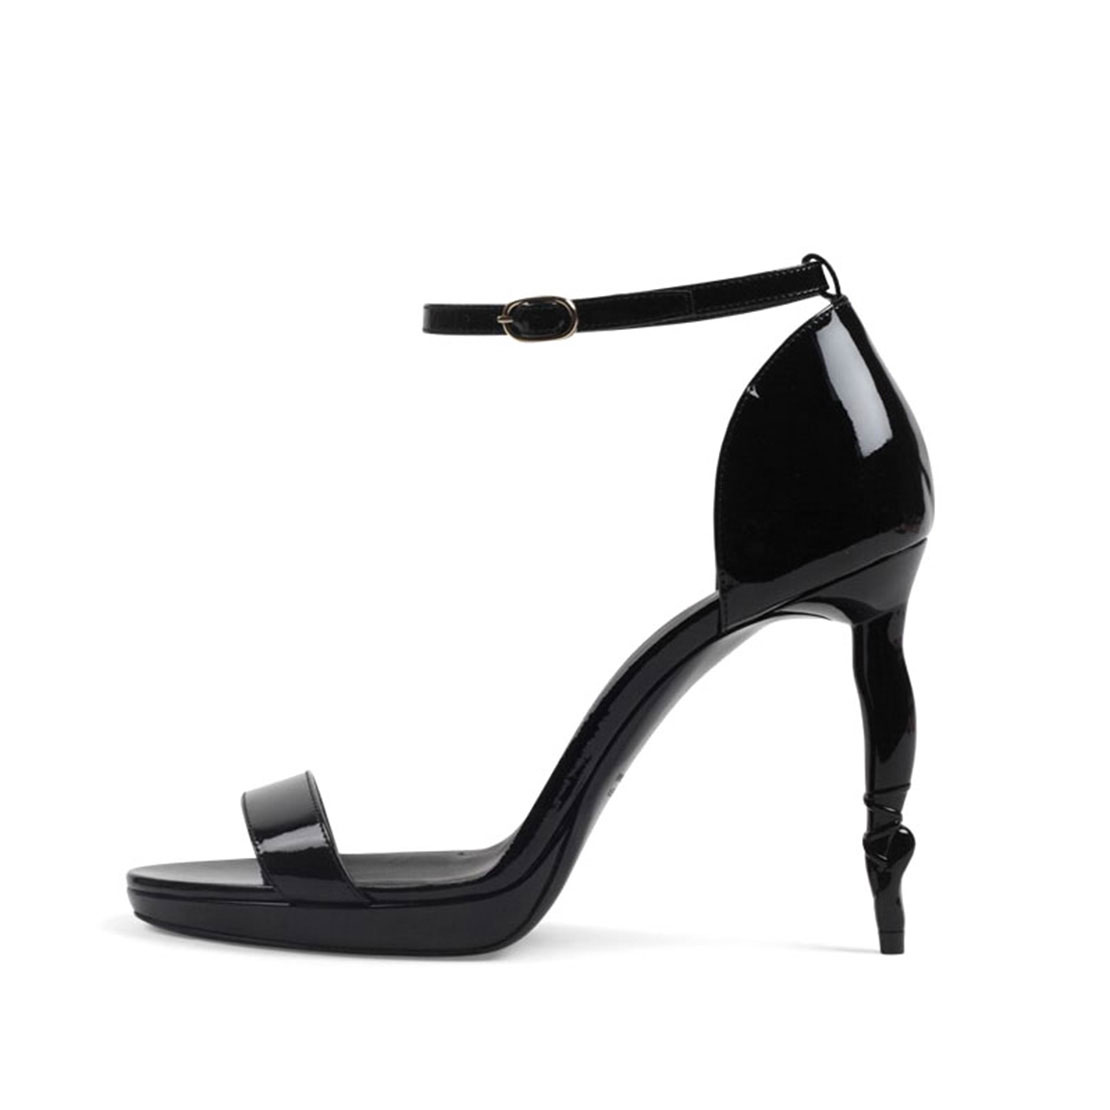 Special heels design ankle strap sandals women shoes YB3025 - Sandals ...